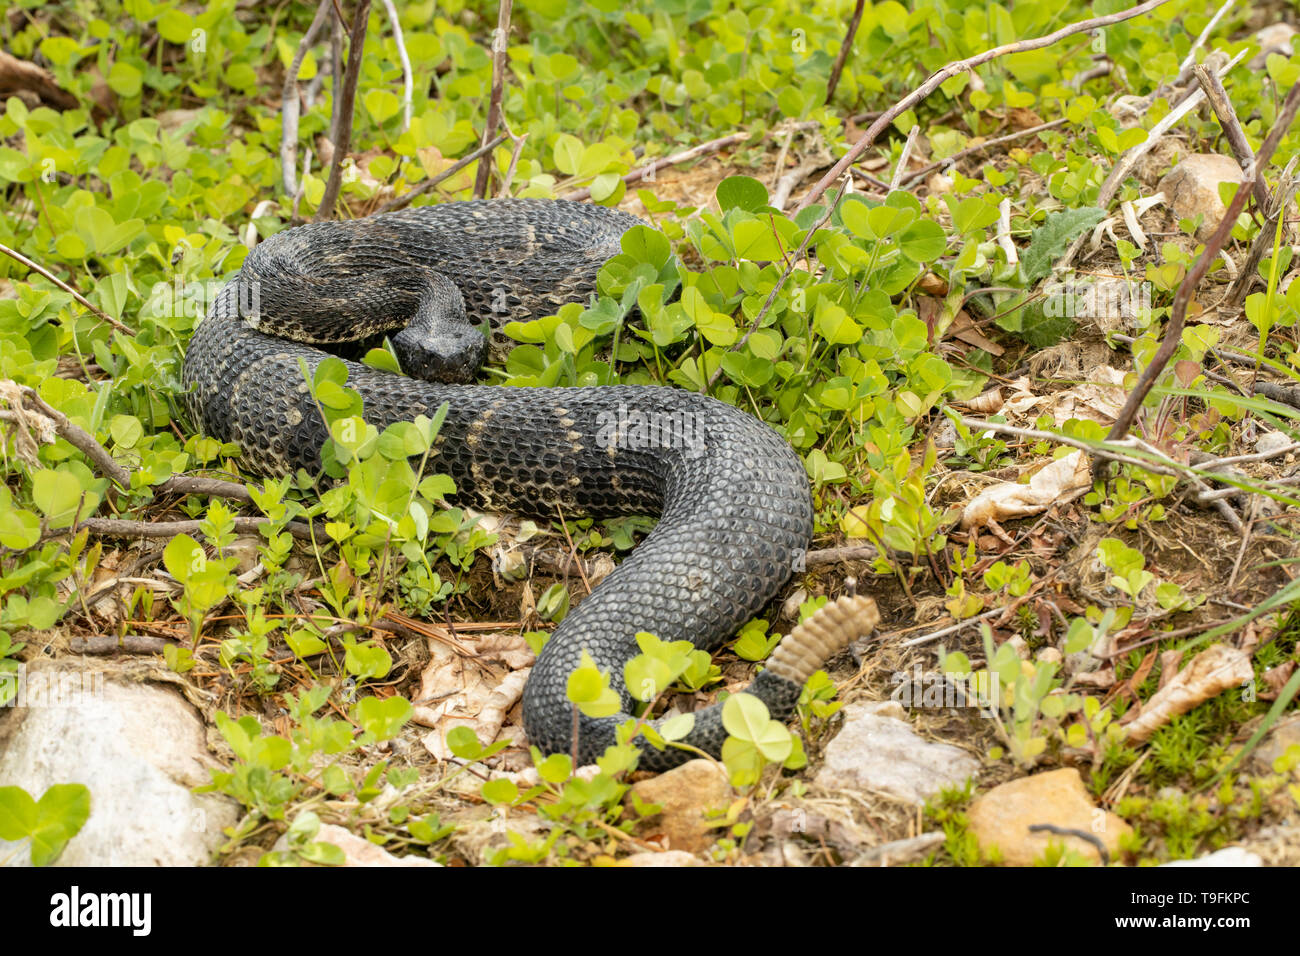 Black phase timber rattlesnake - Crotalus horridus Stock Photo